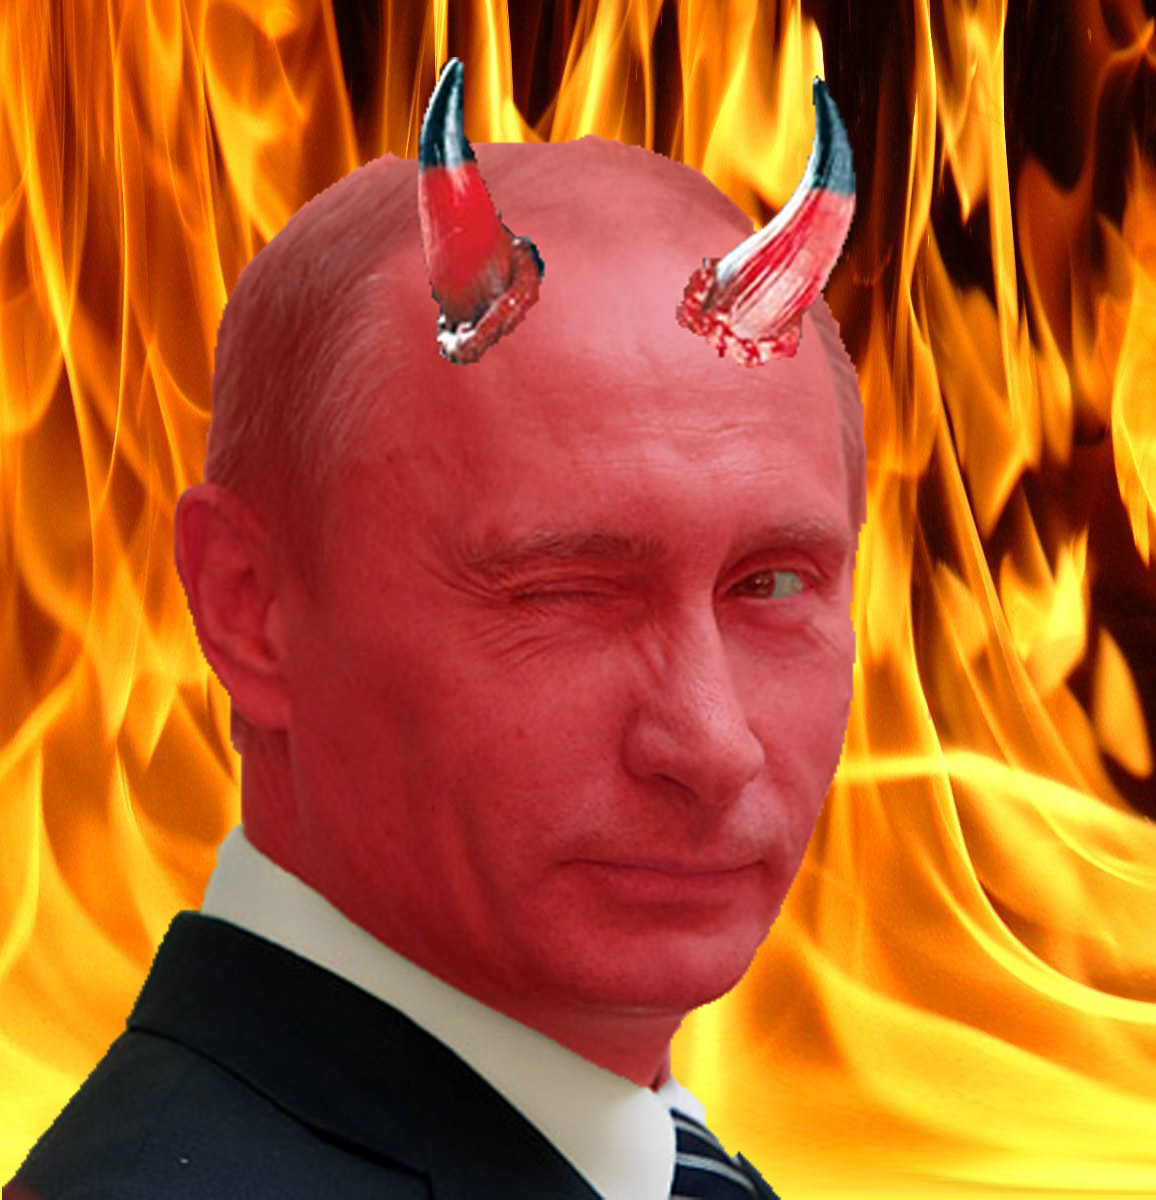 Putin-as-devil.jpg